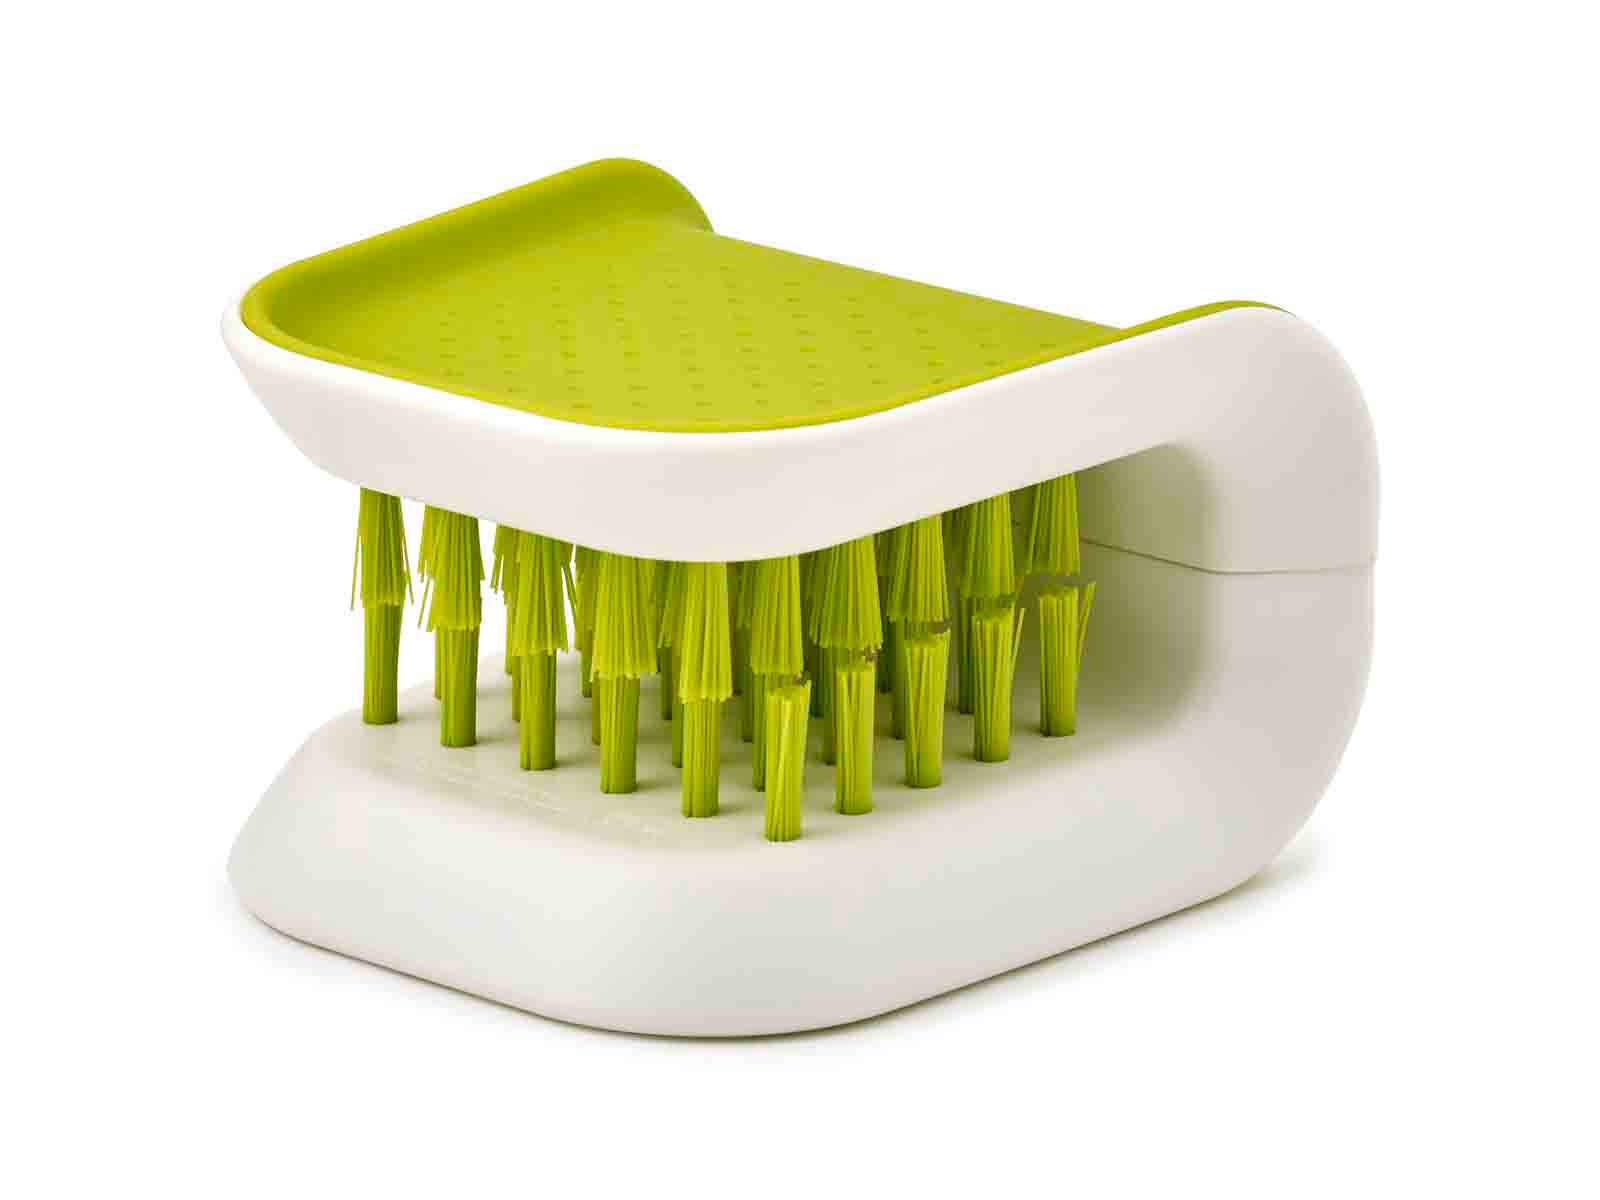 Cepillo clásico para lavar platos, cepillo natural con 2 cabezales de  cepillo de repuesto de madera de haya para suministros de limpieza de cocina